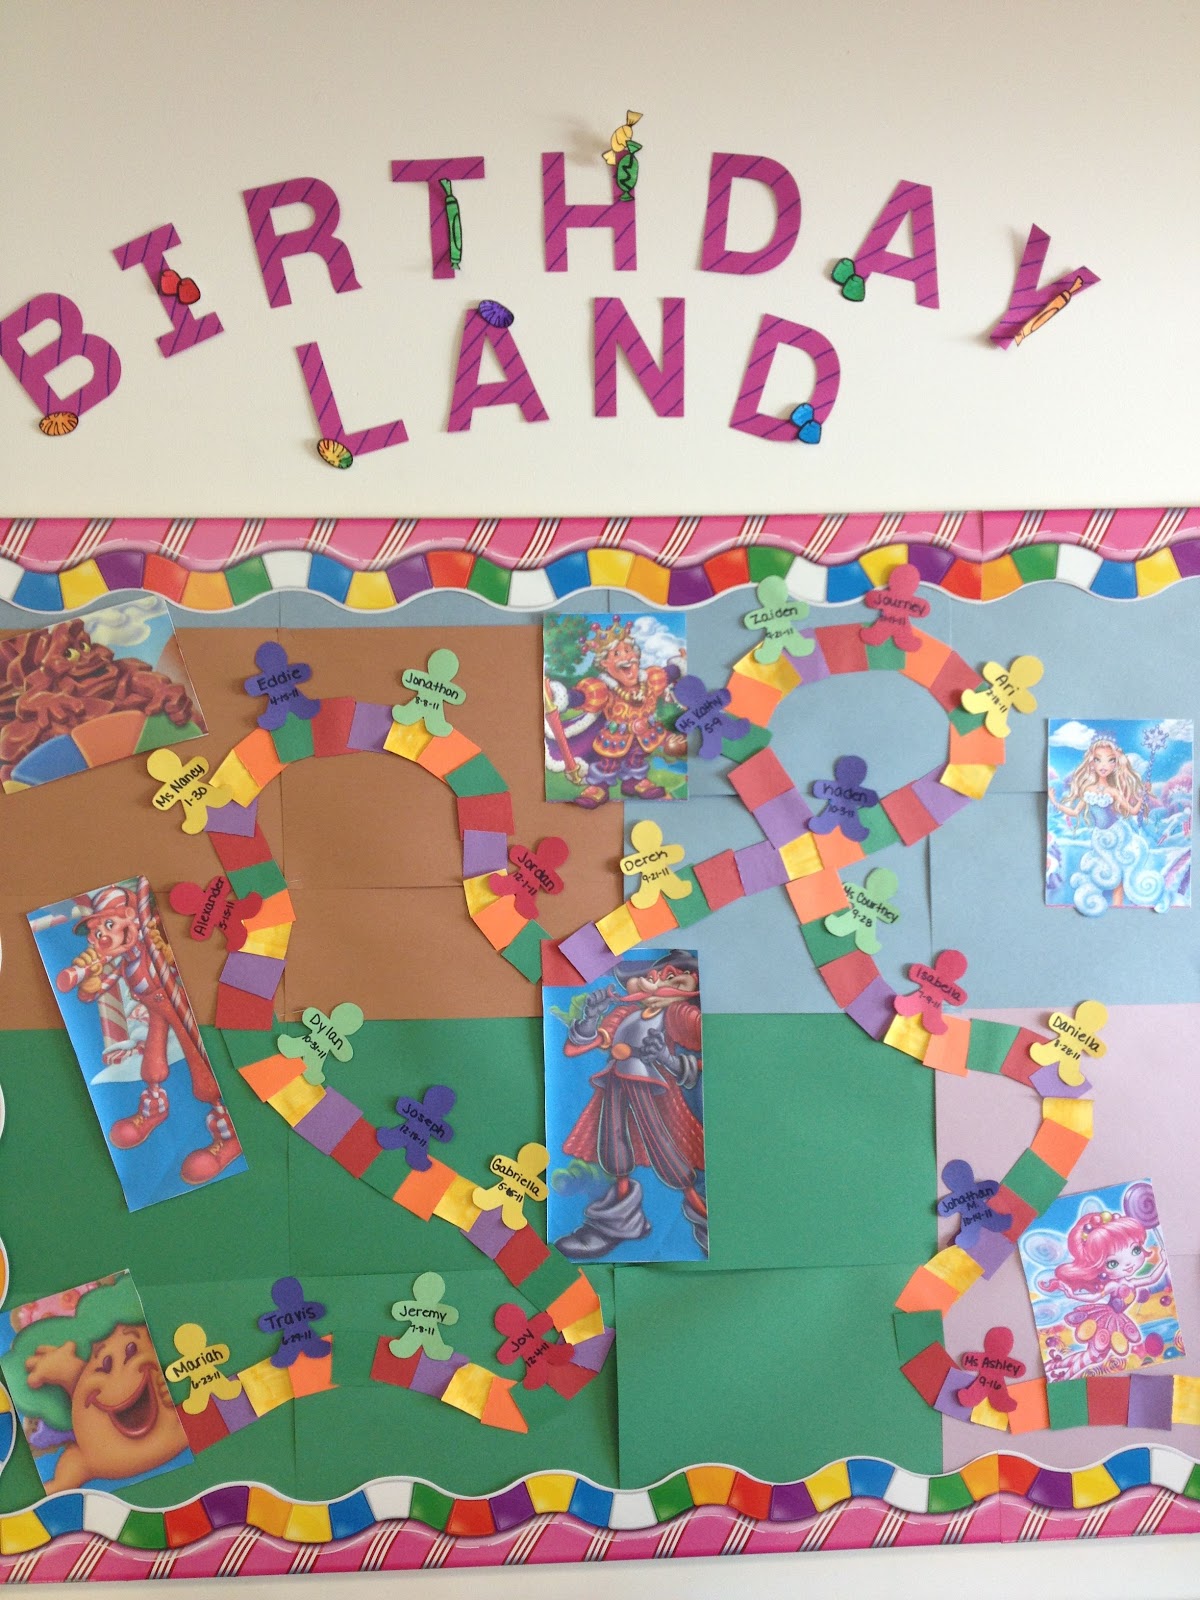 Our classroom candyland birthday board | School projects | Preschool ...